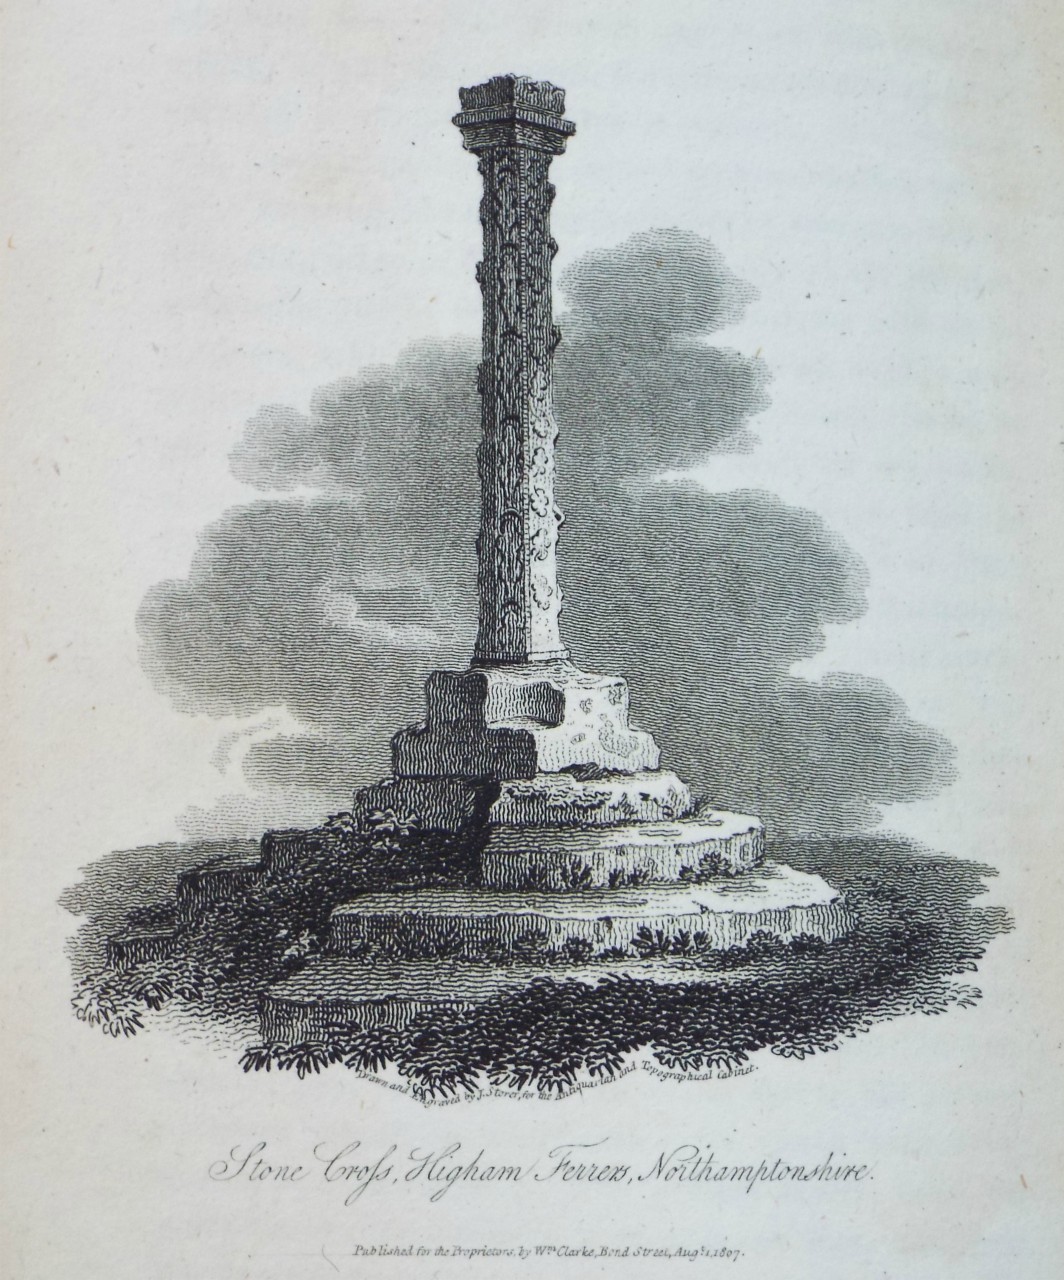 Print - Stone Cross, Higham Ferrers, Northamptonshire. - Storer